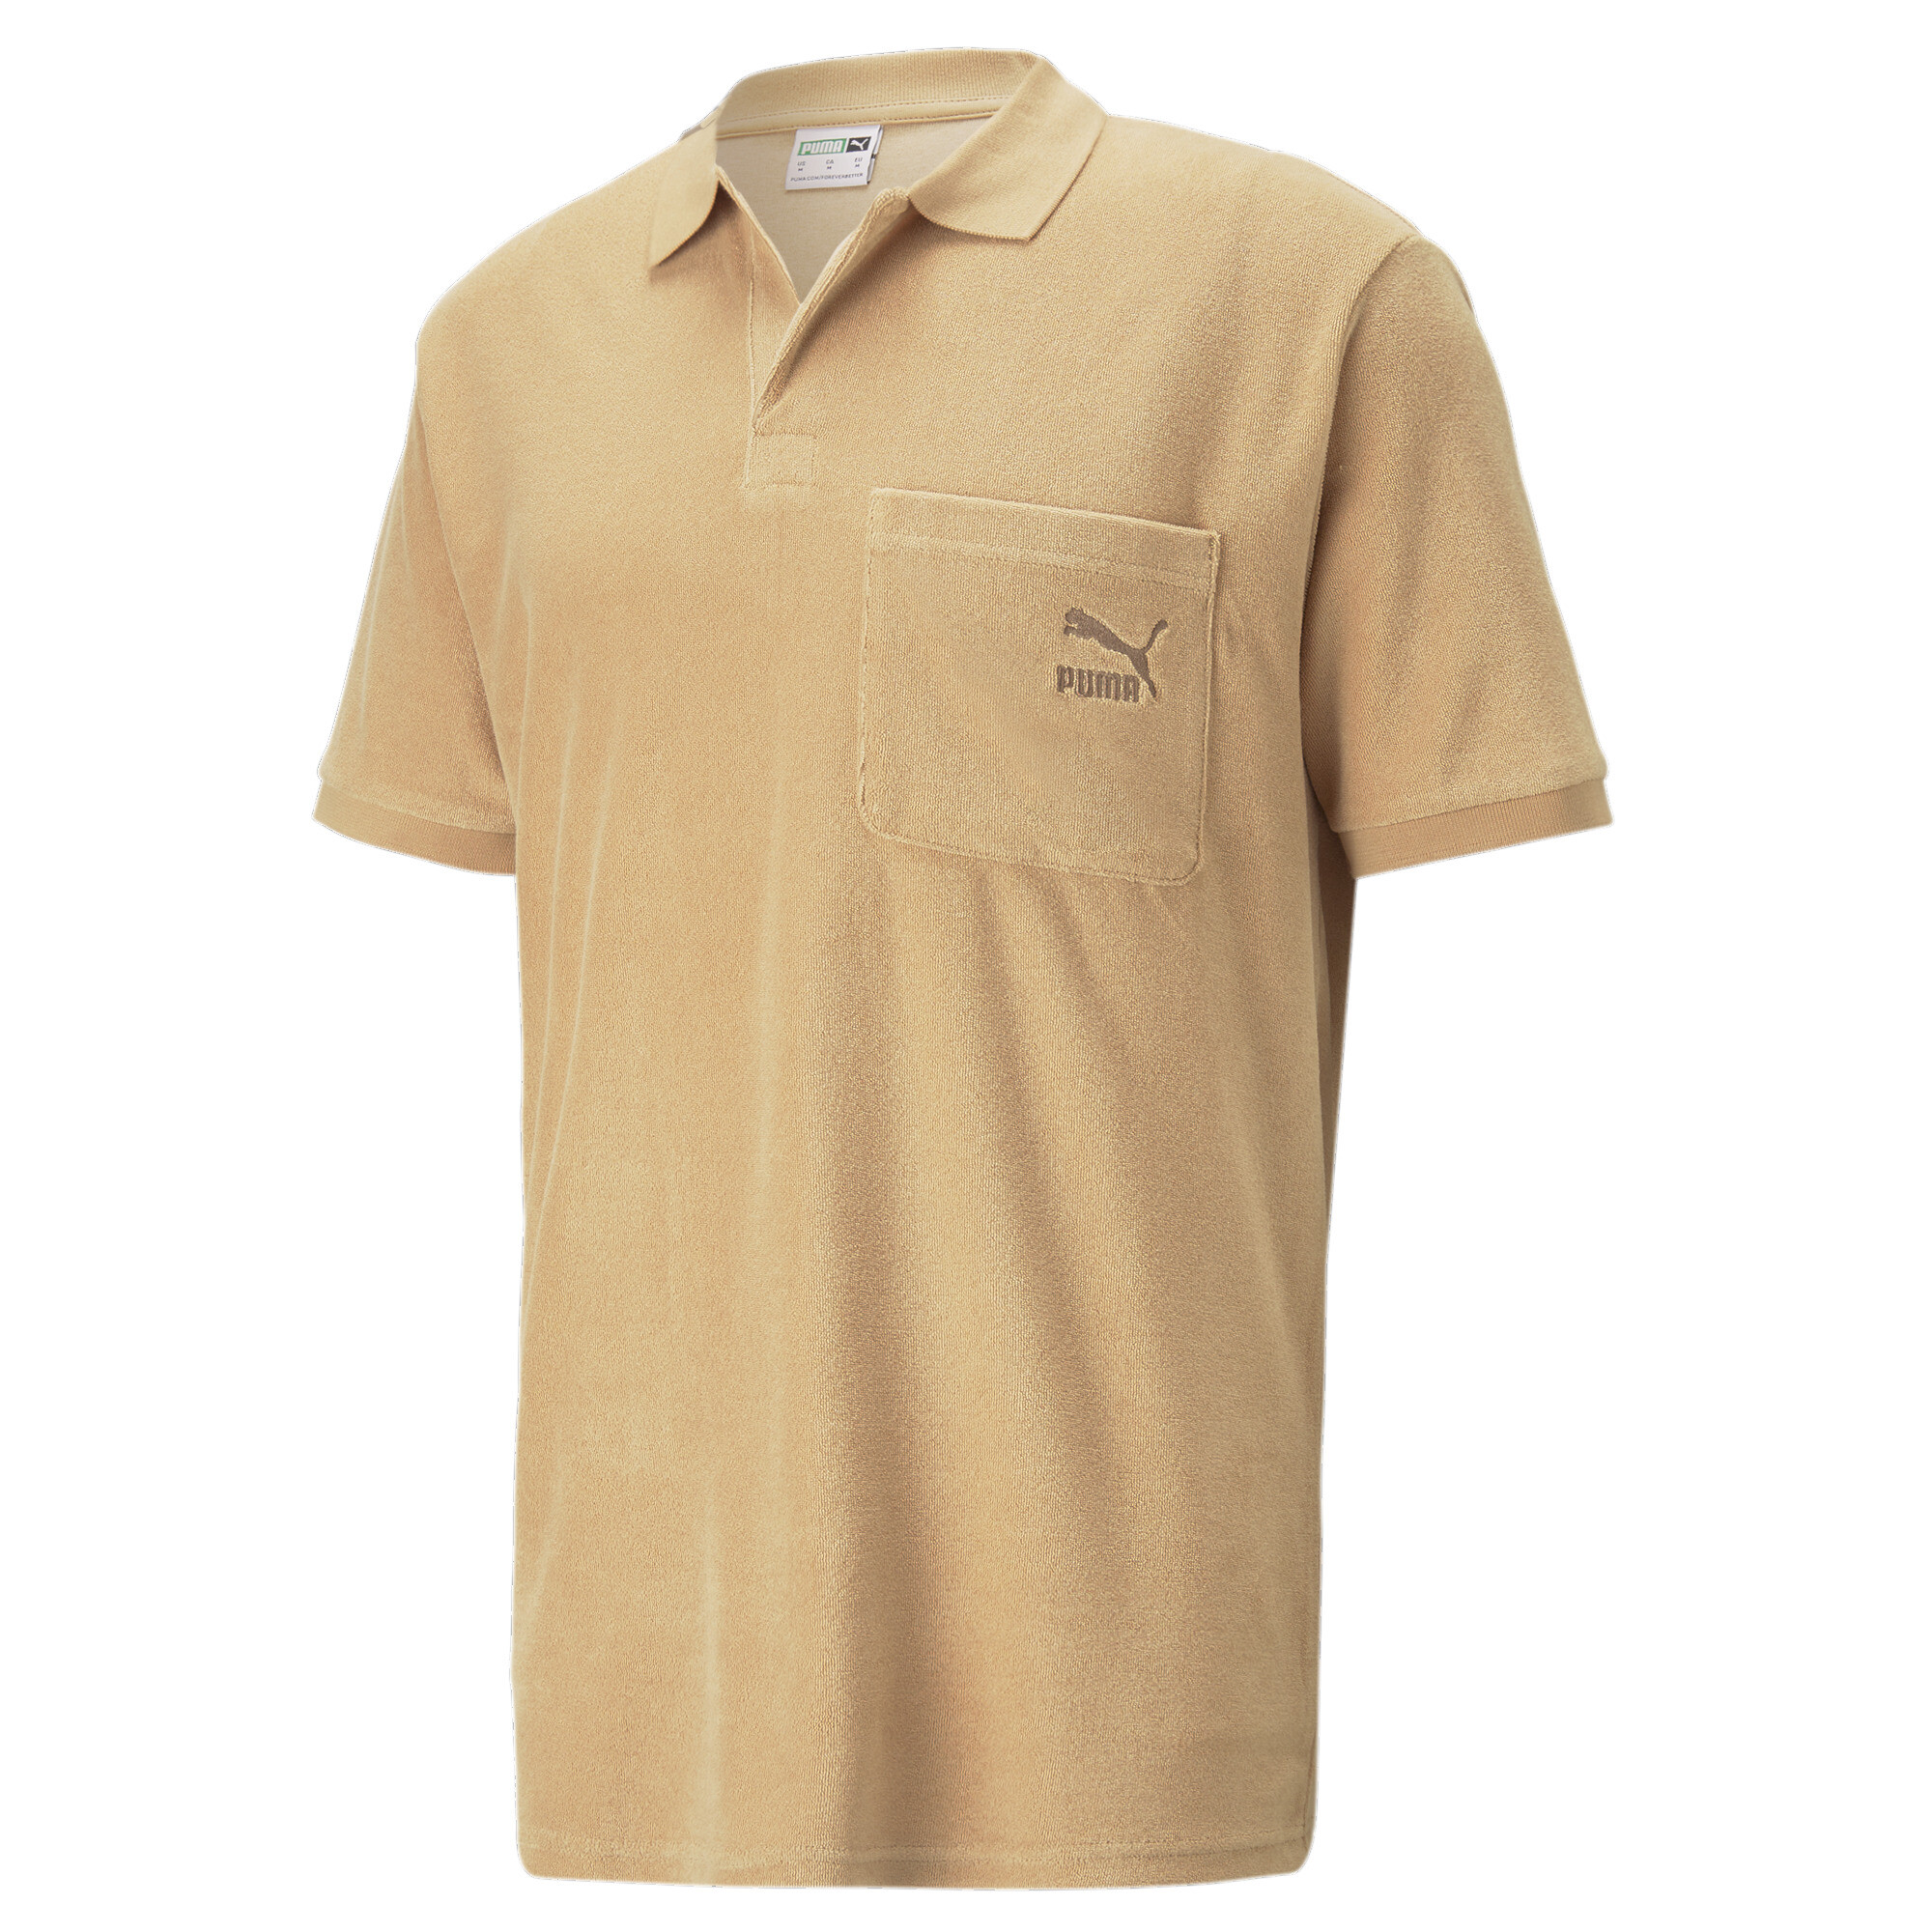 Men's Puma Classics Towelling Polo Shirt T-Shirt, Beige T-Shirt, Size S T-Shirt, Clothing